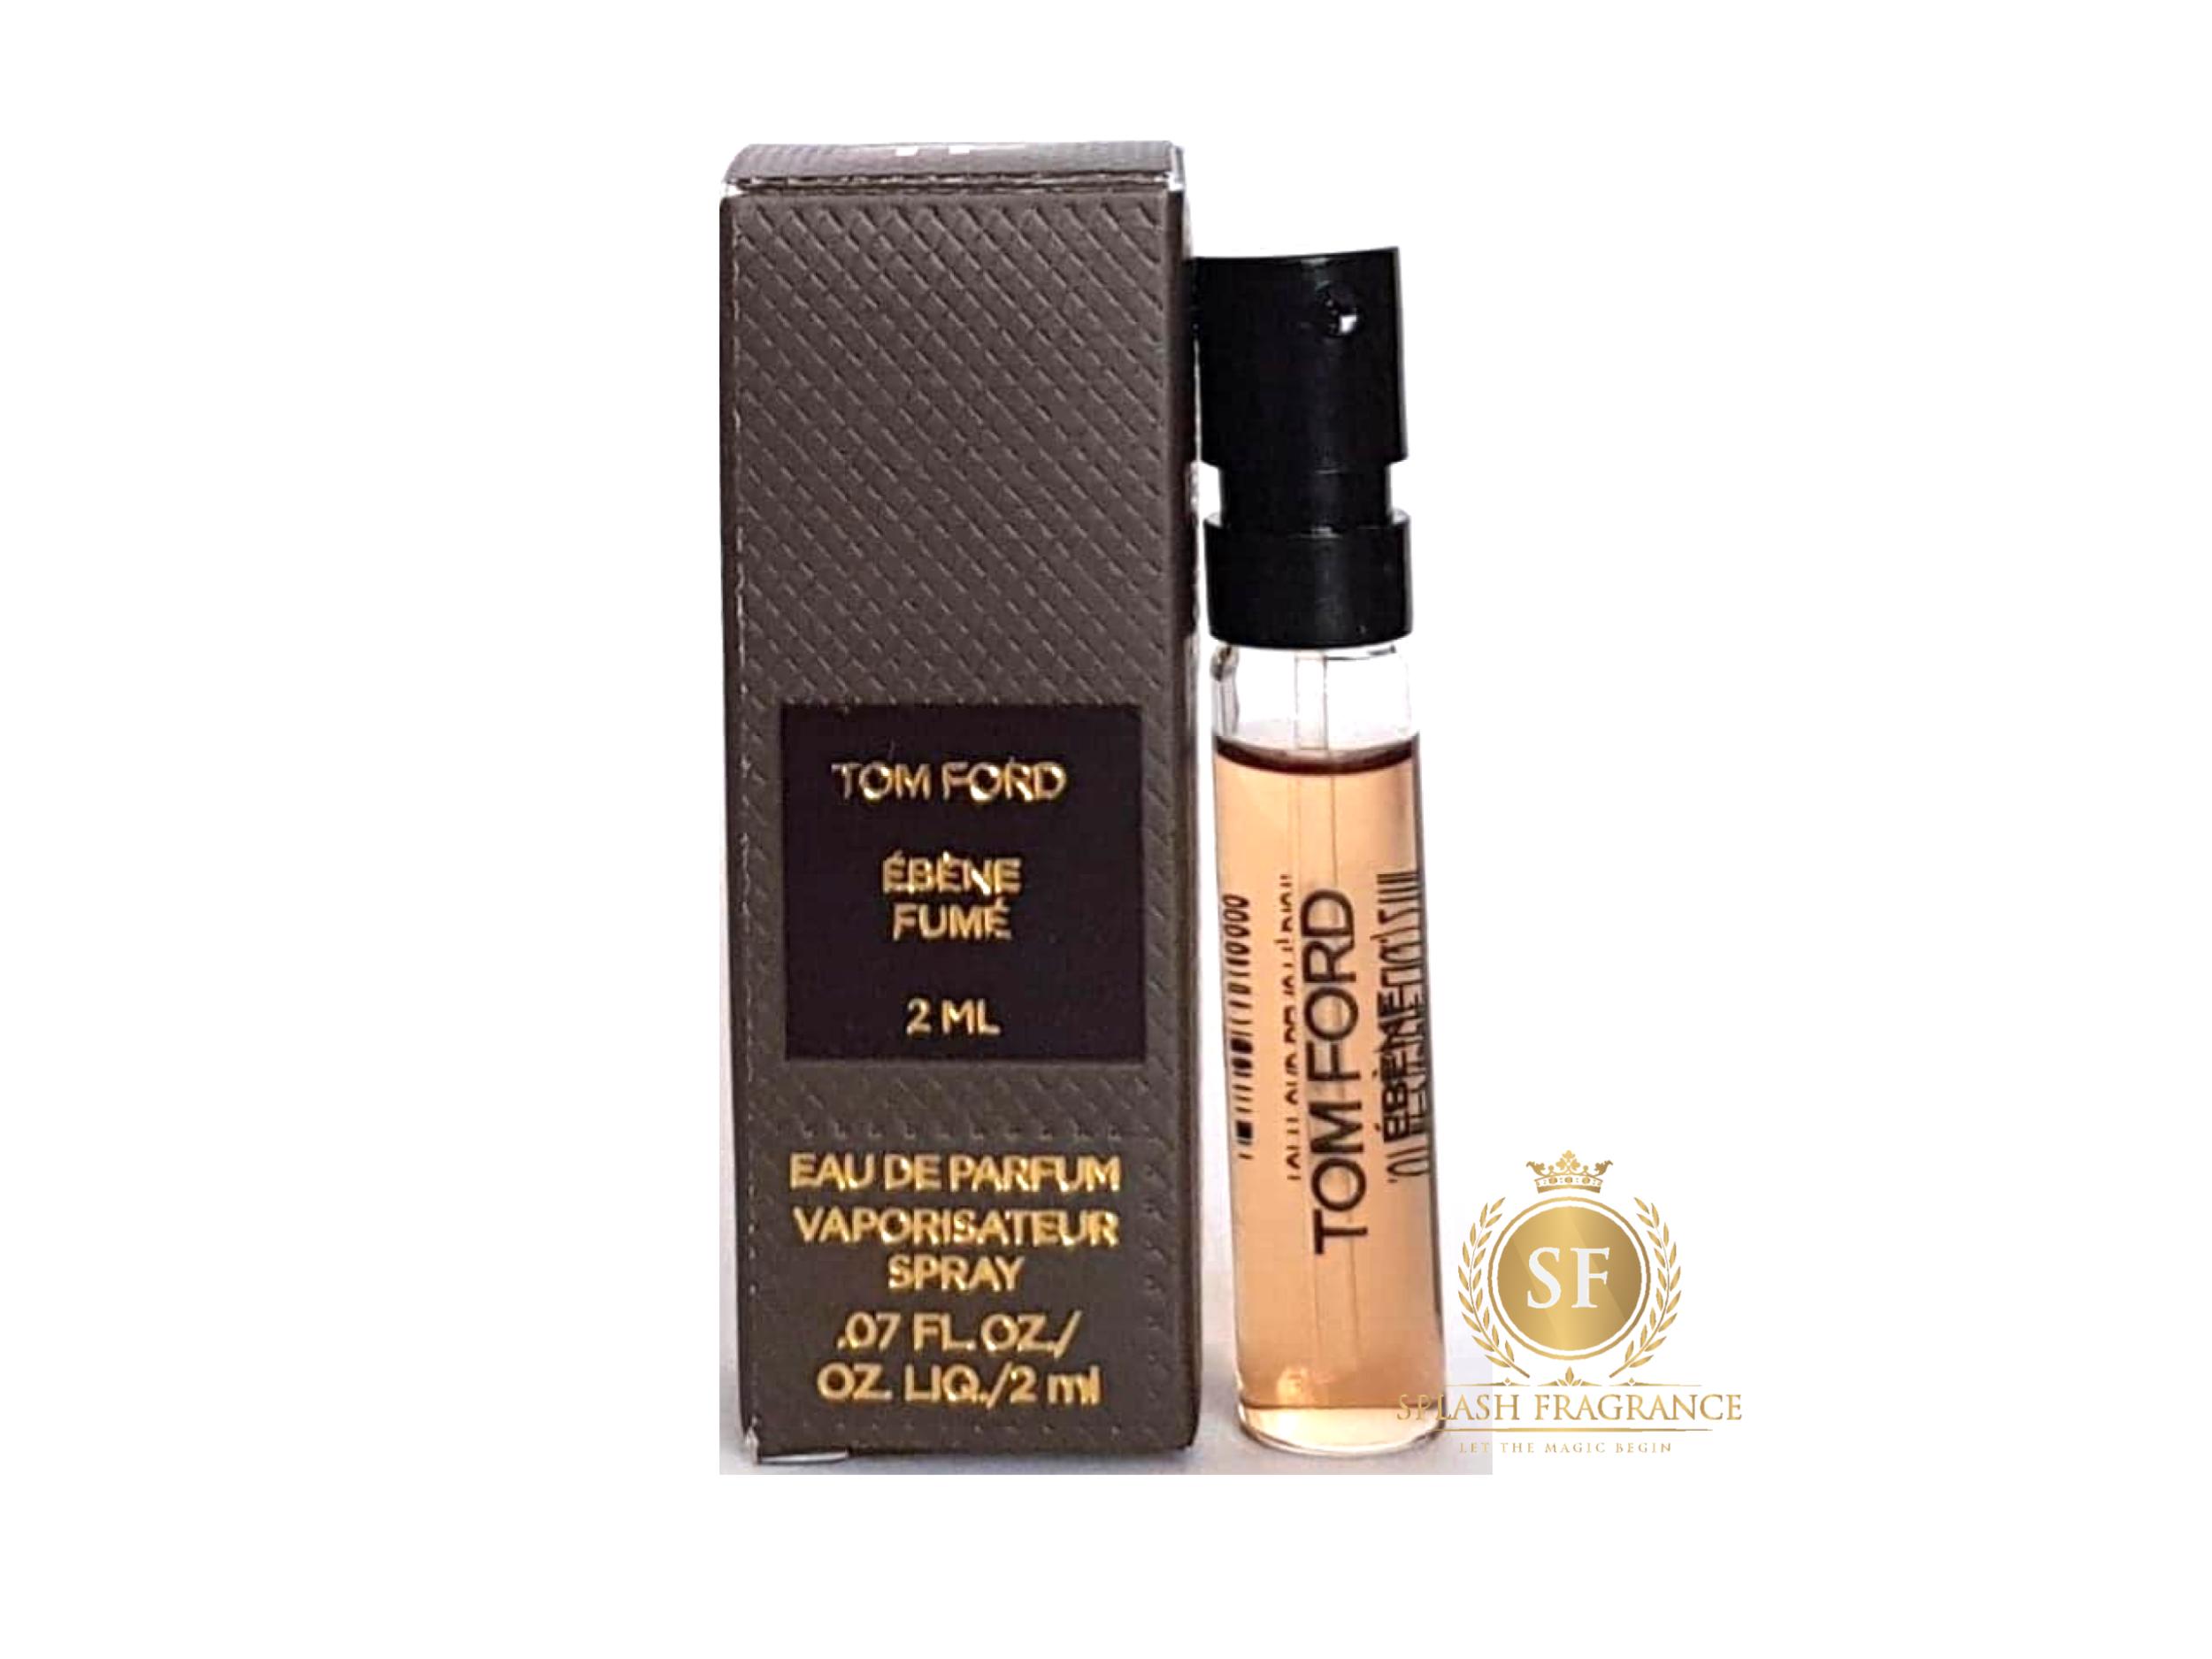 Ebene Fume By Tom Ford 2ml Perfume Sample Vial Spray – Splash Fragrance